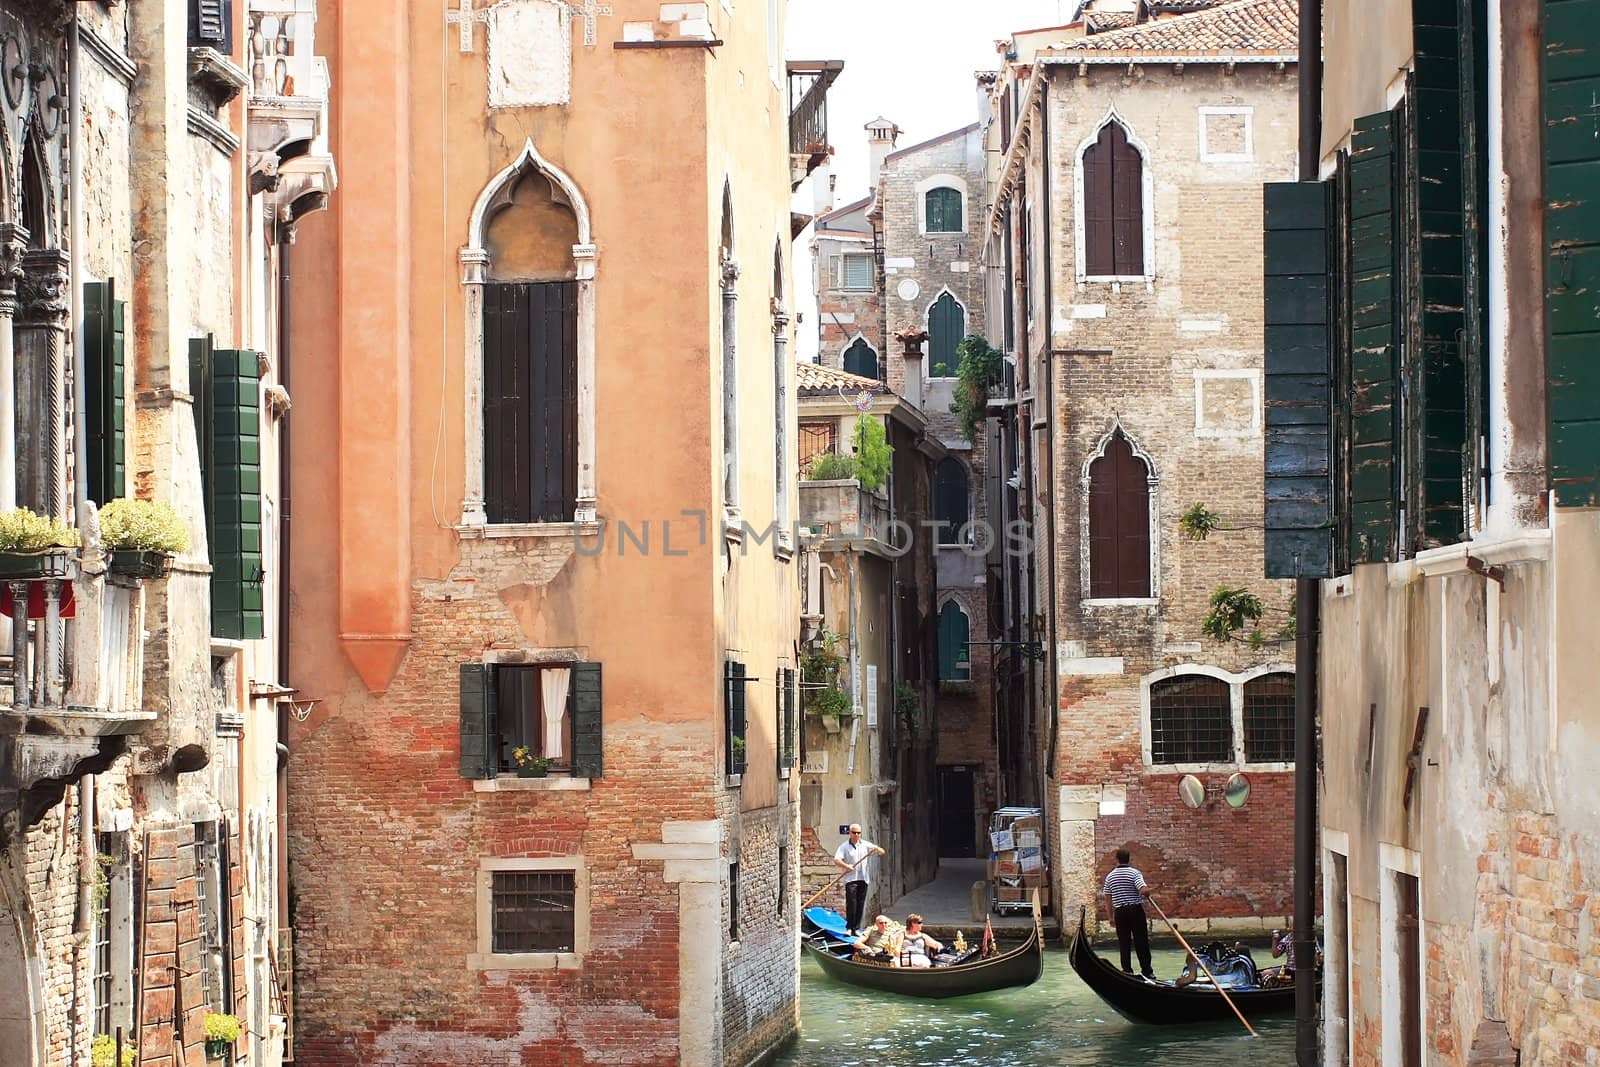 Venice. A crossroads by Ledoct